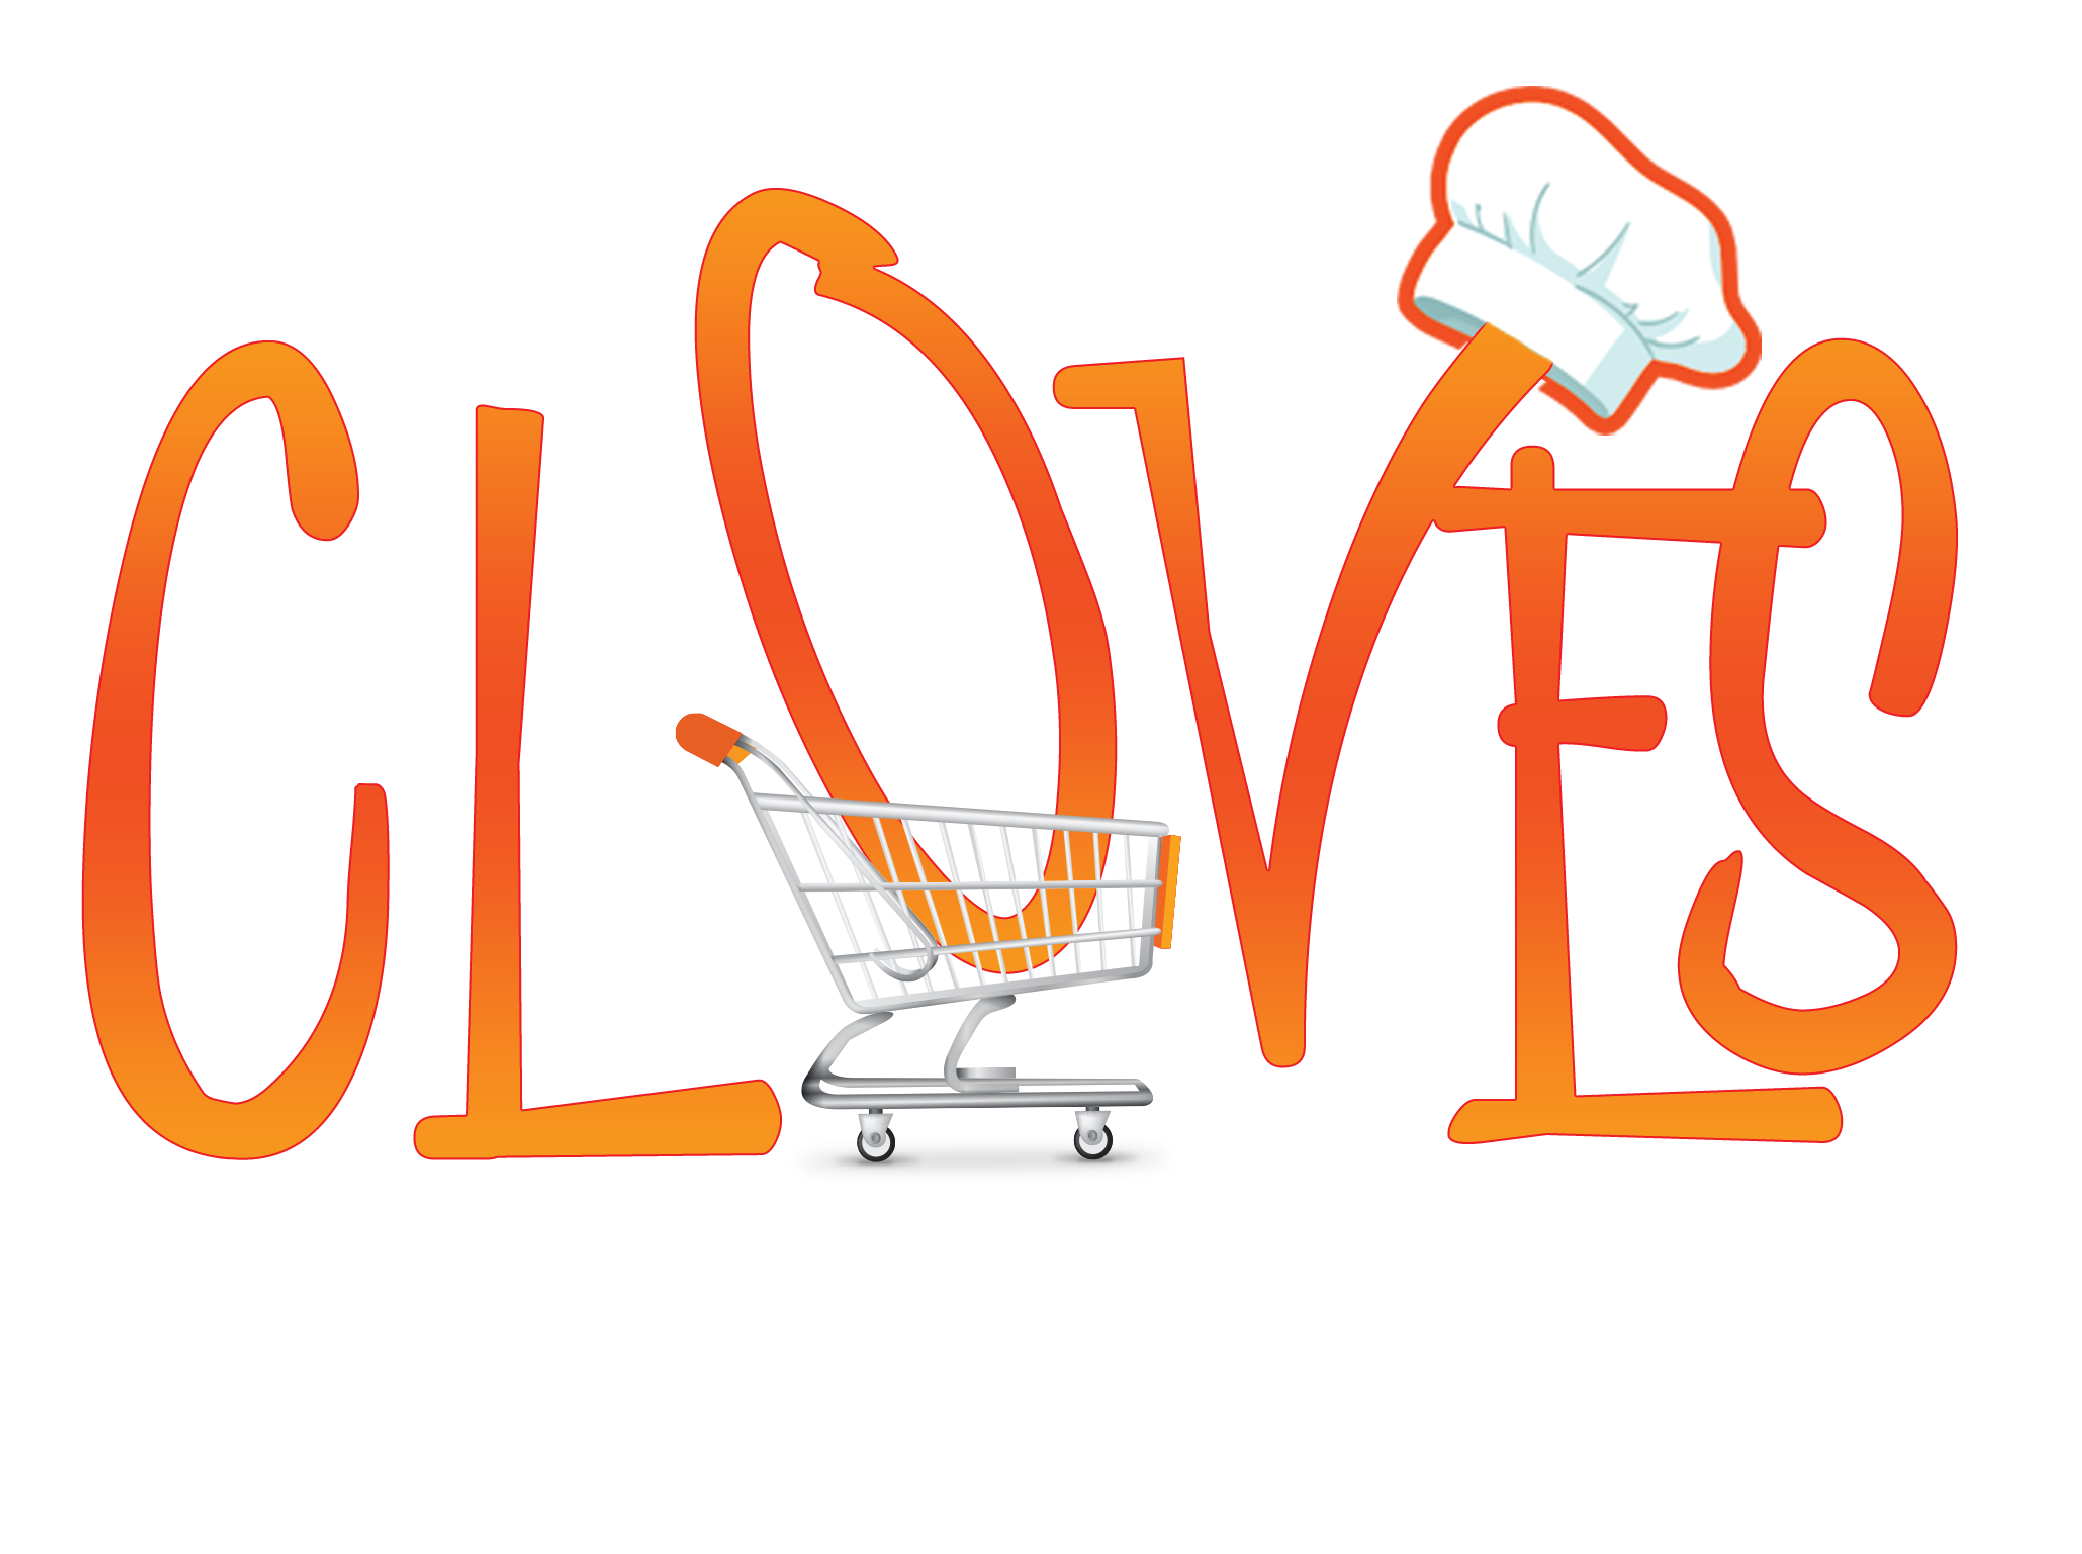 Cloves Indian Groceries & Kitchen